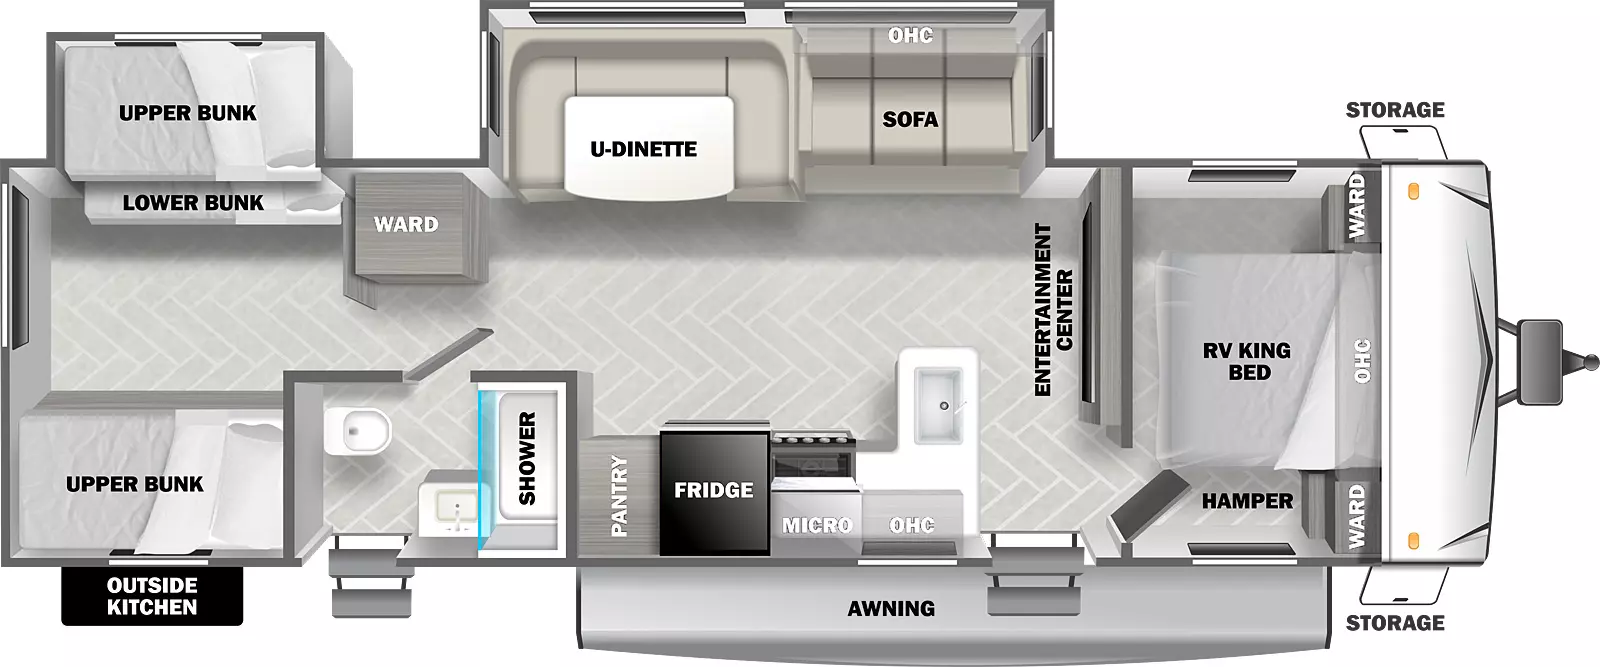 Evo Southwest T3250 Floorplan